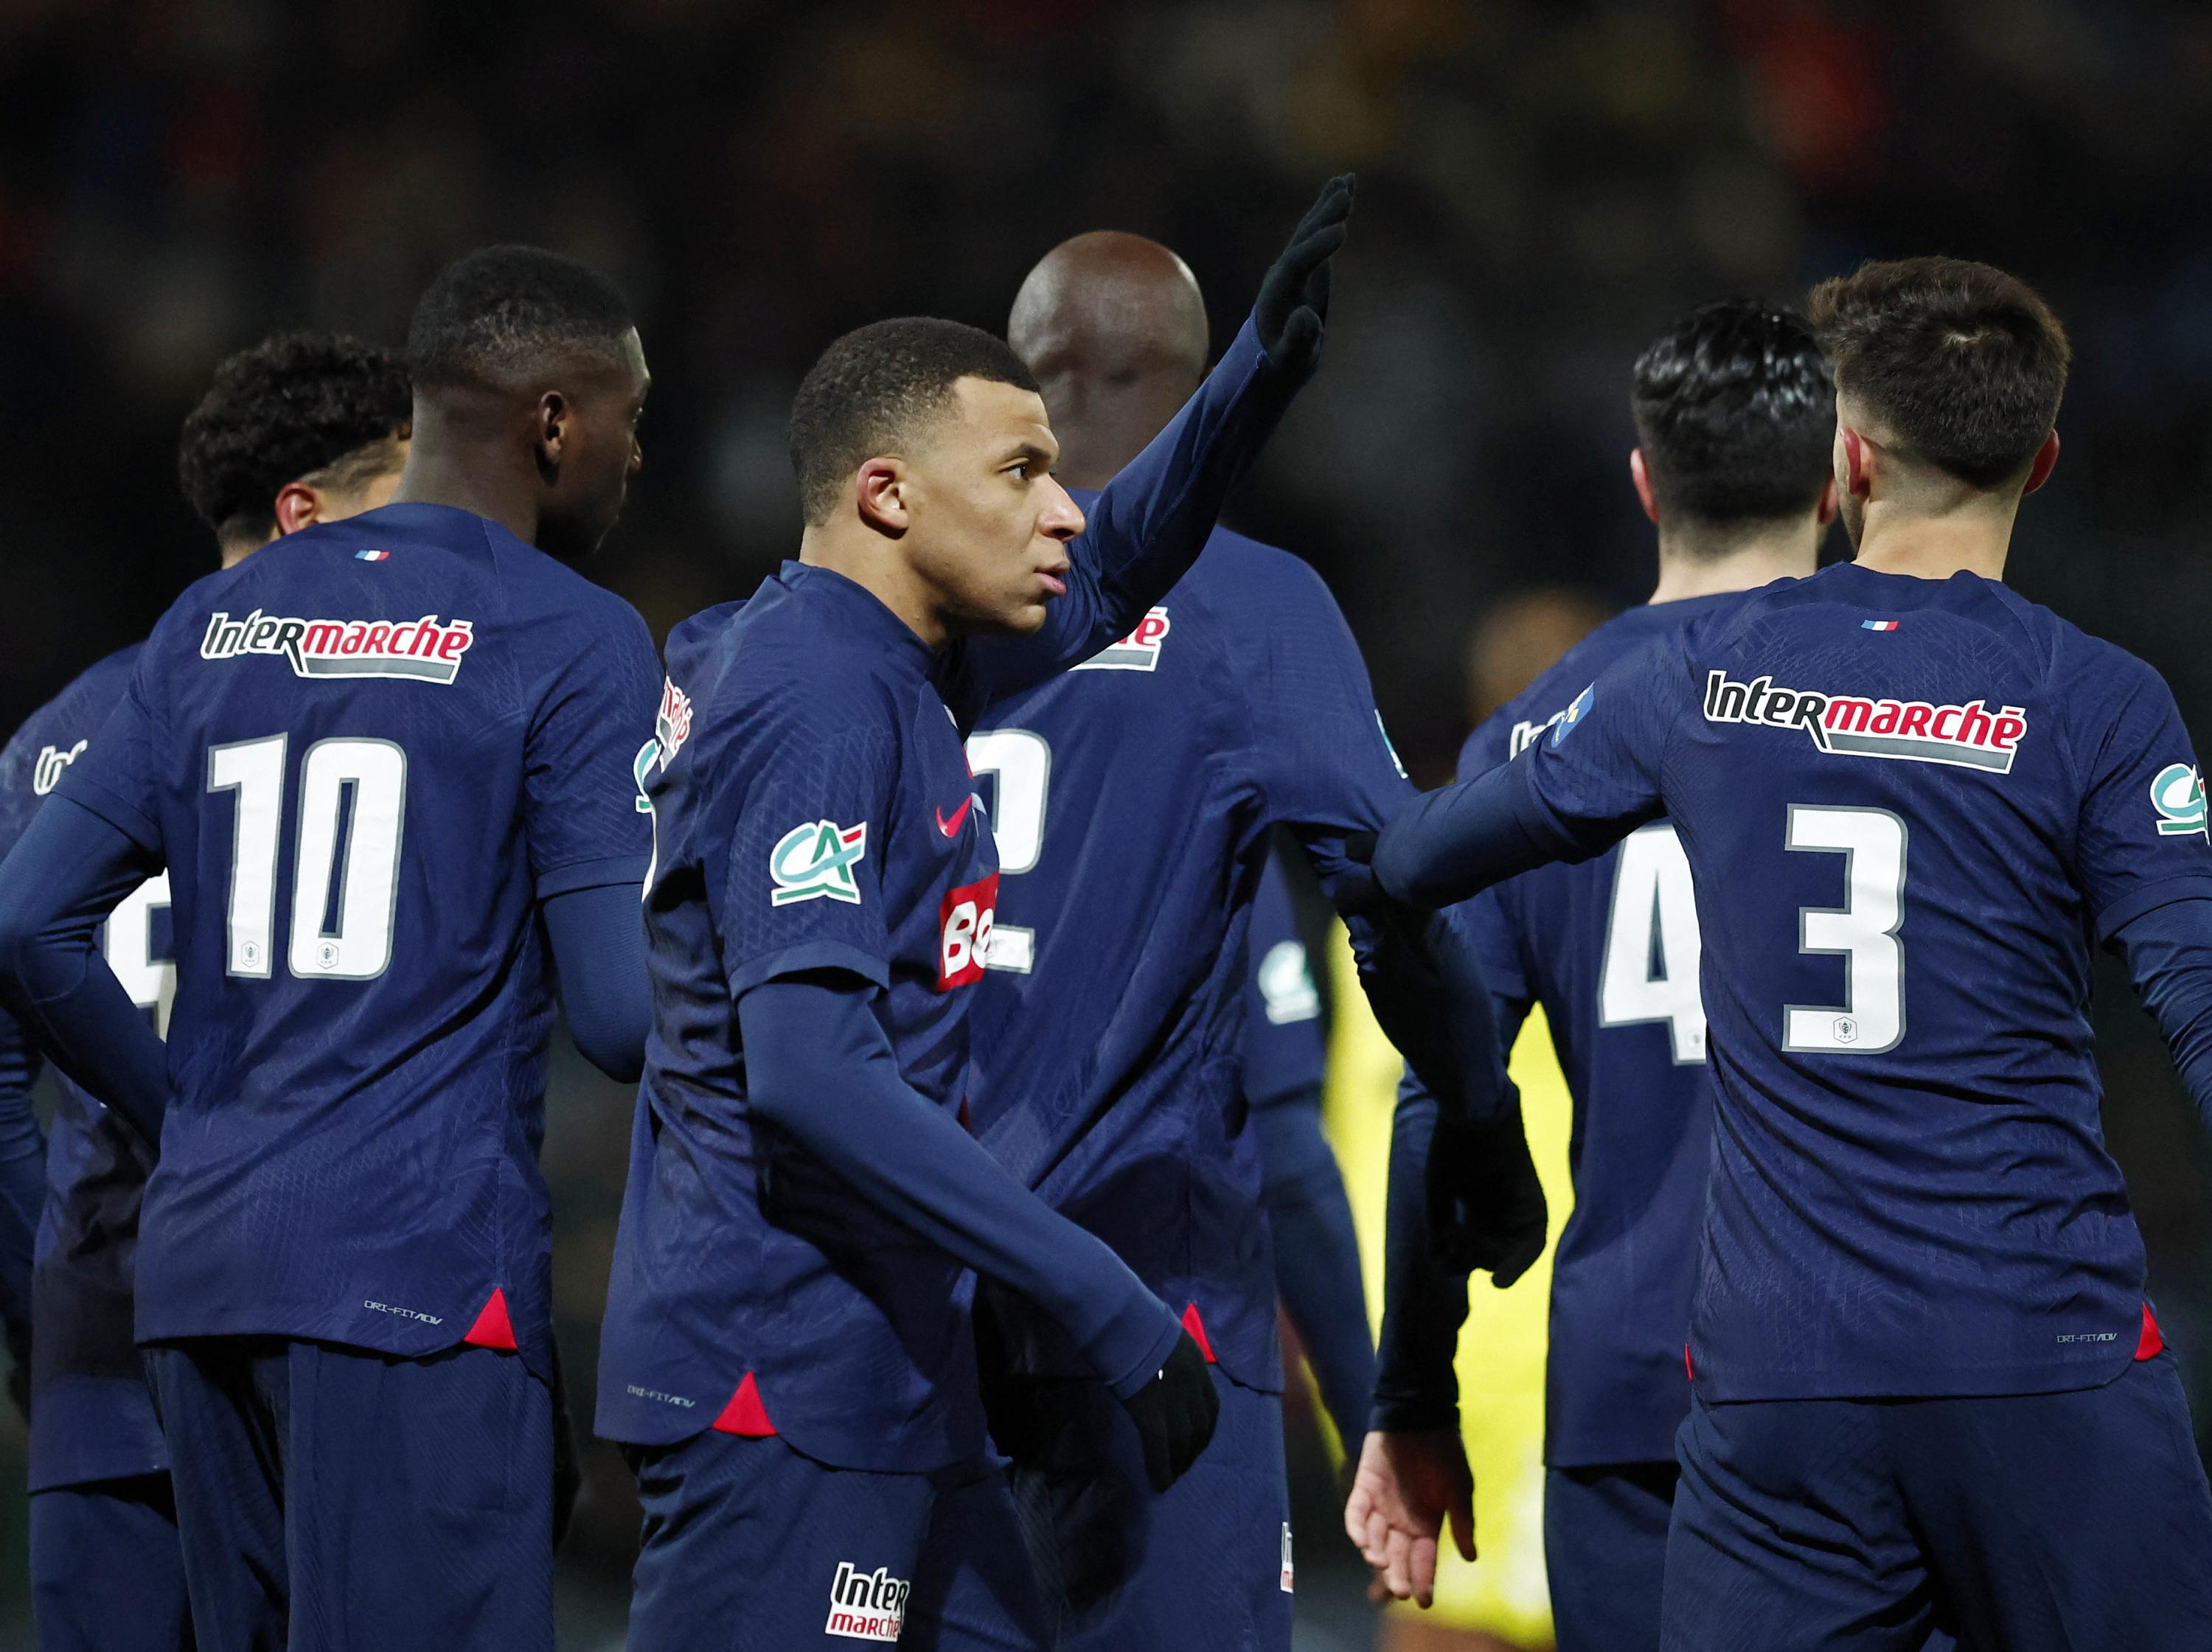 Coupe de France: carried by a great Mbappé, PSG wins against a valiant Orléans team